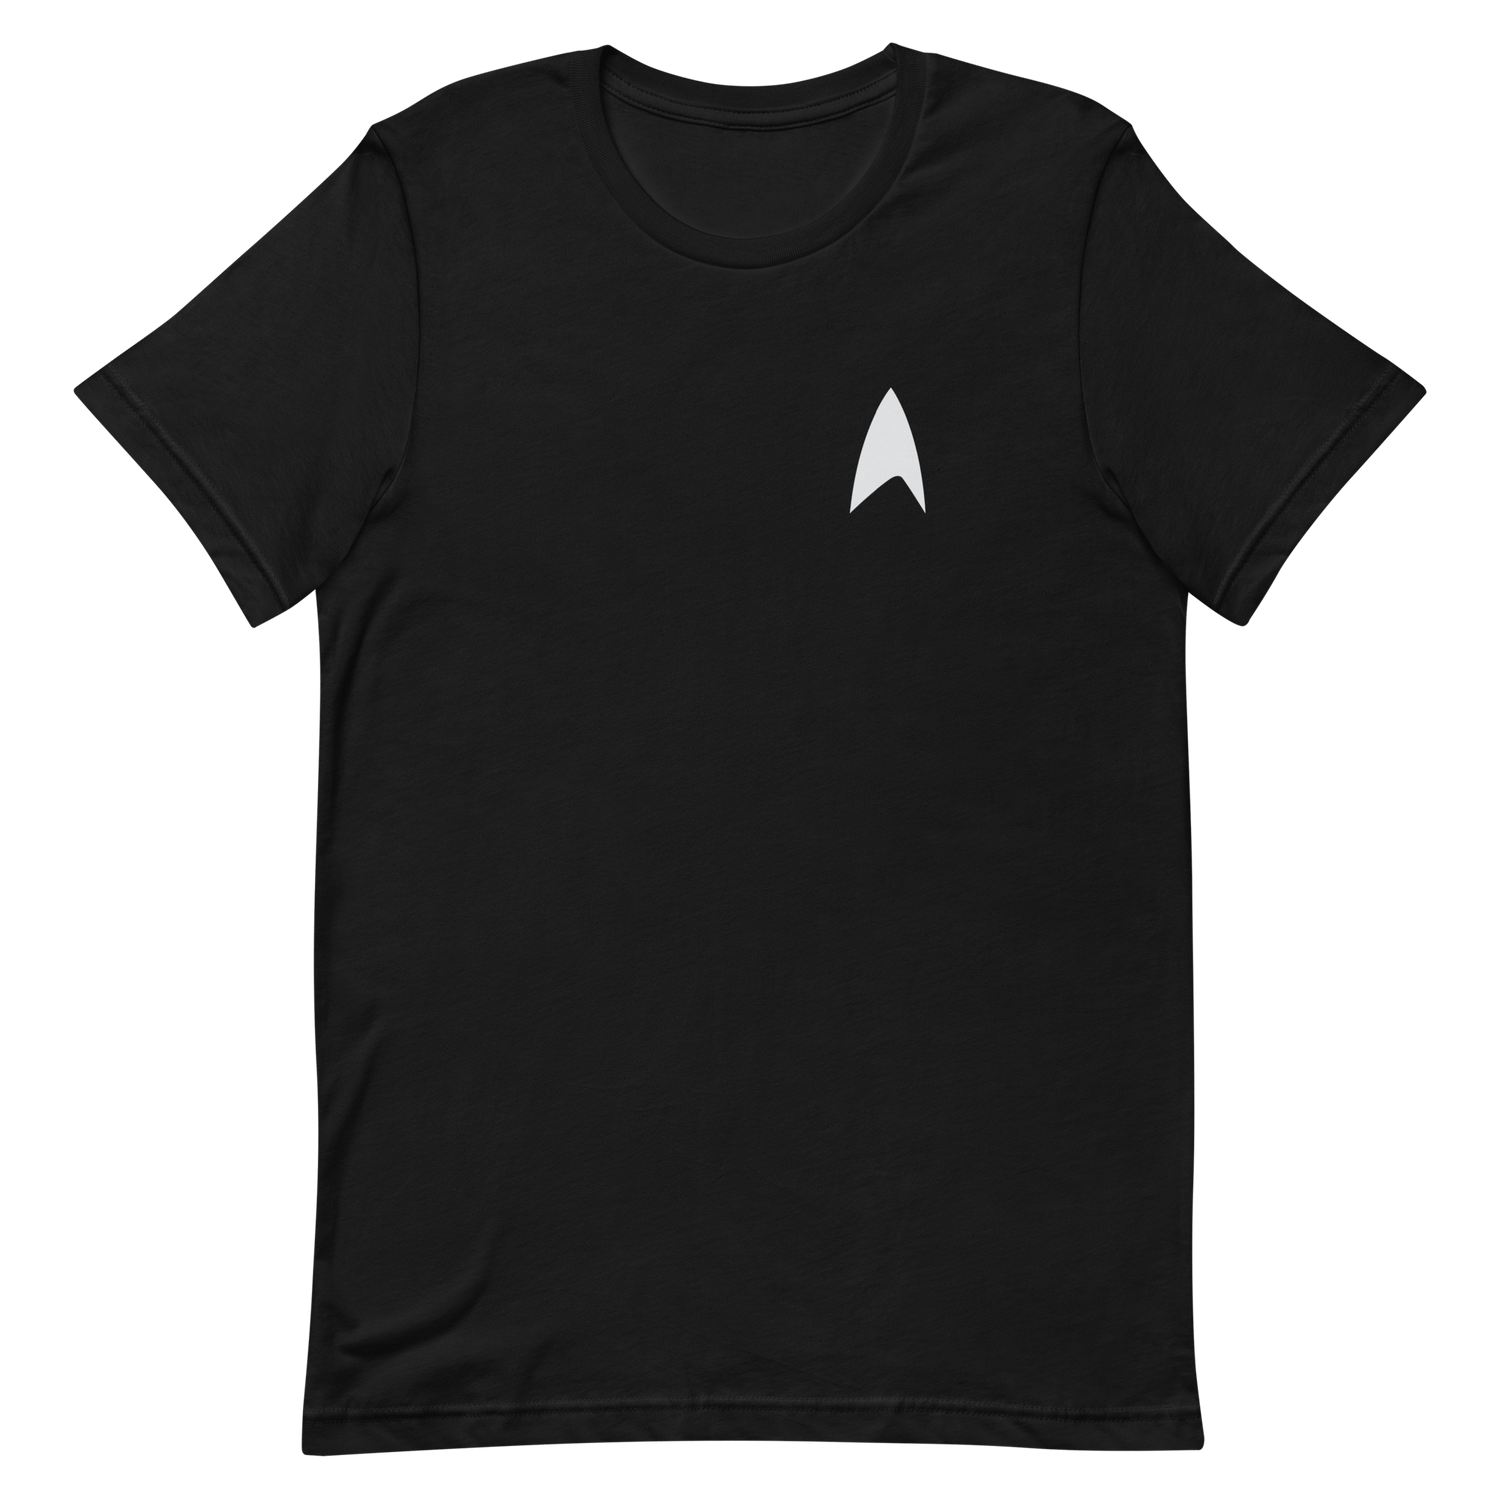 Star Trek: Lower Decks Rarely Going Where No One Has Gone Before Unisex Premium T - Shirt - Paramount Shop